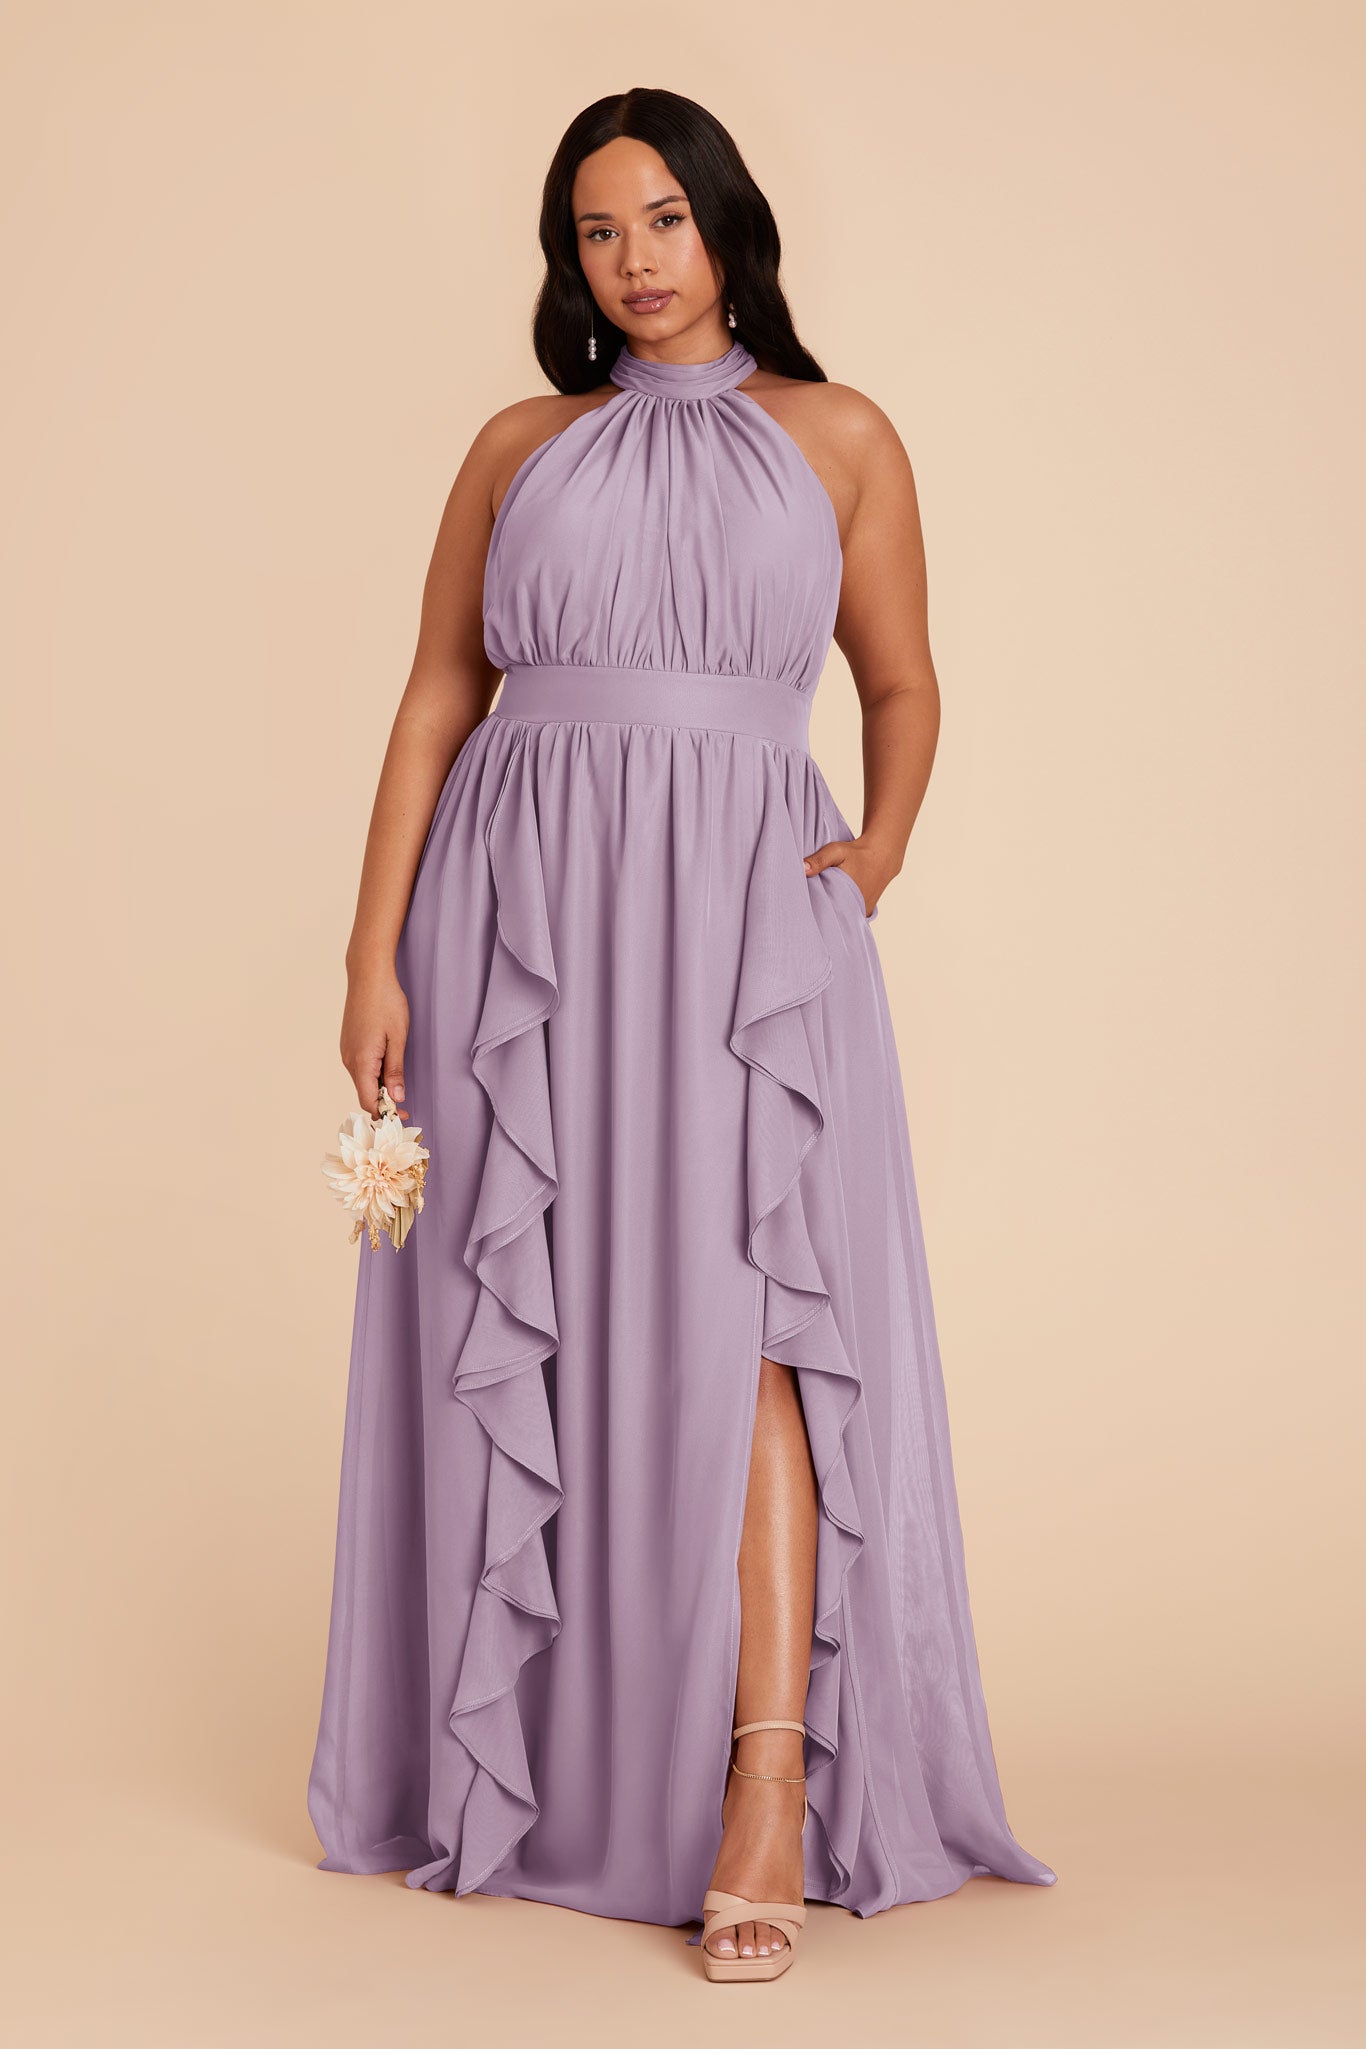 Lavender Joyce Chiffon Dress by Birdy Grey